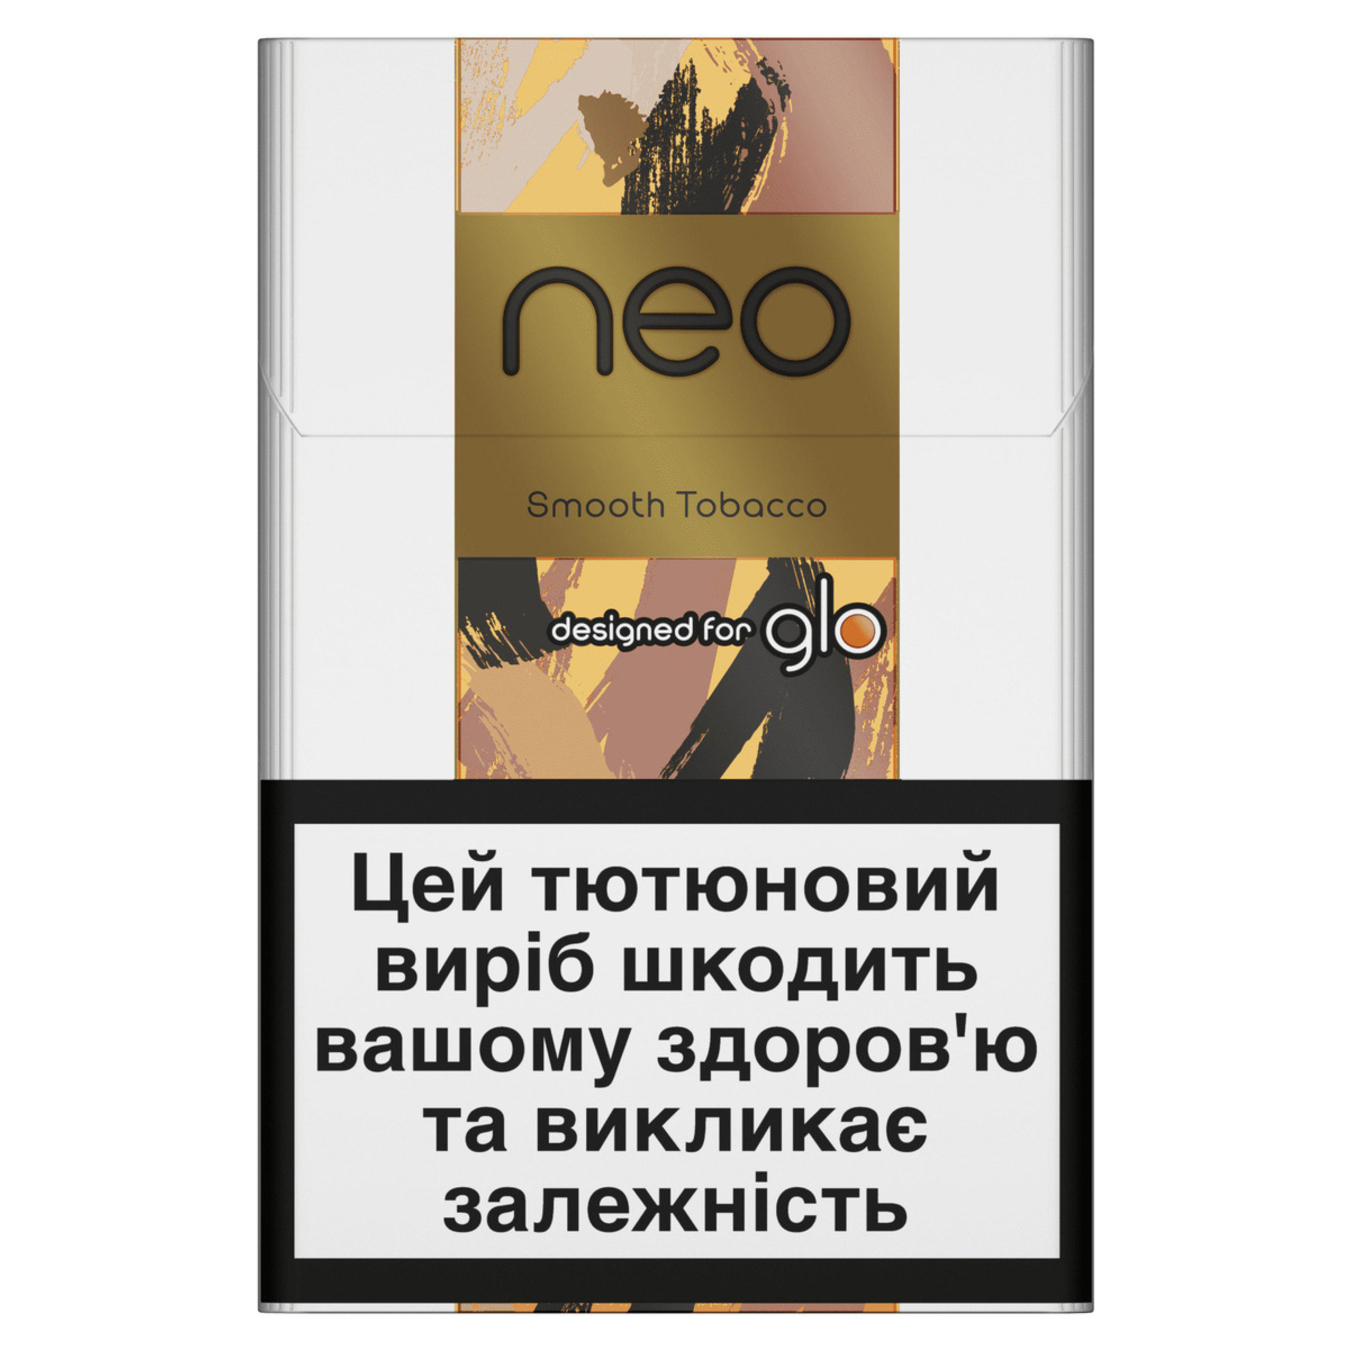 Стіки Neo Smooth Tobacco 20шт (ціна вказана без акцизу)